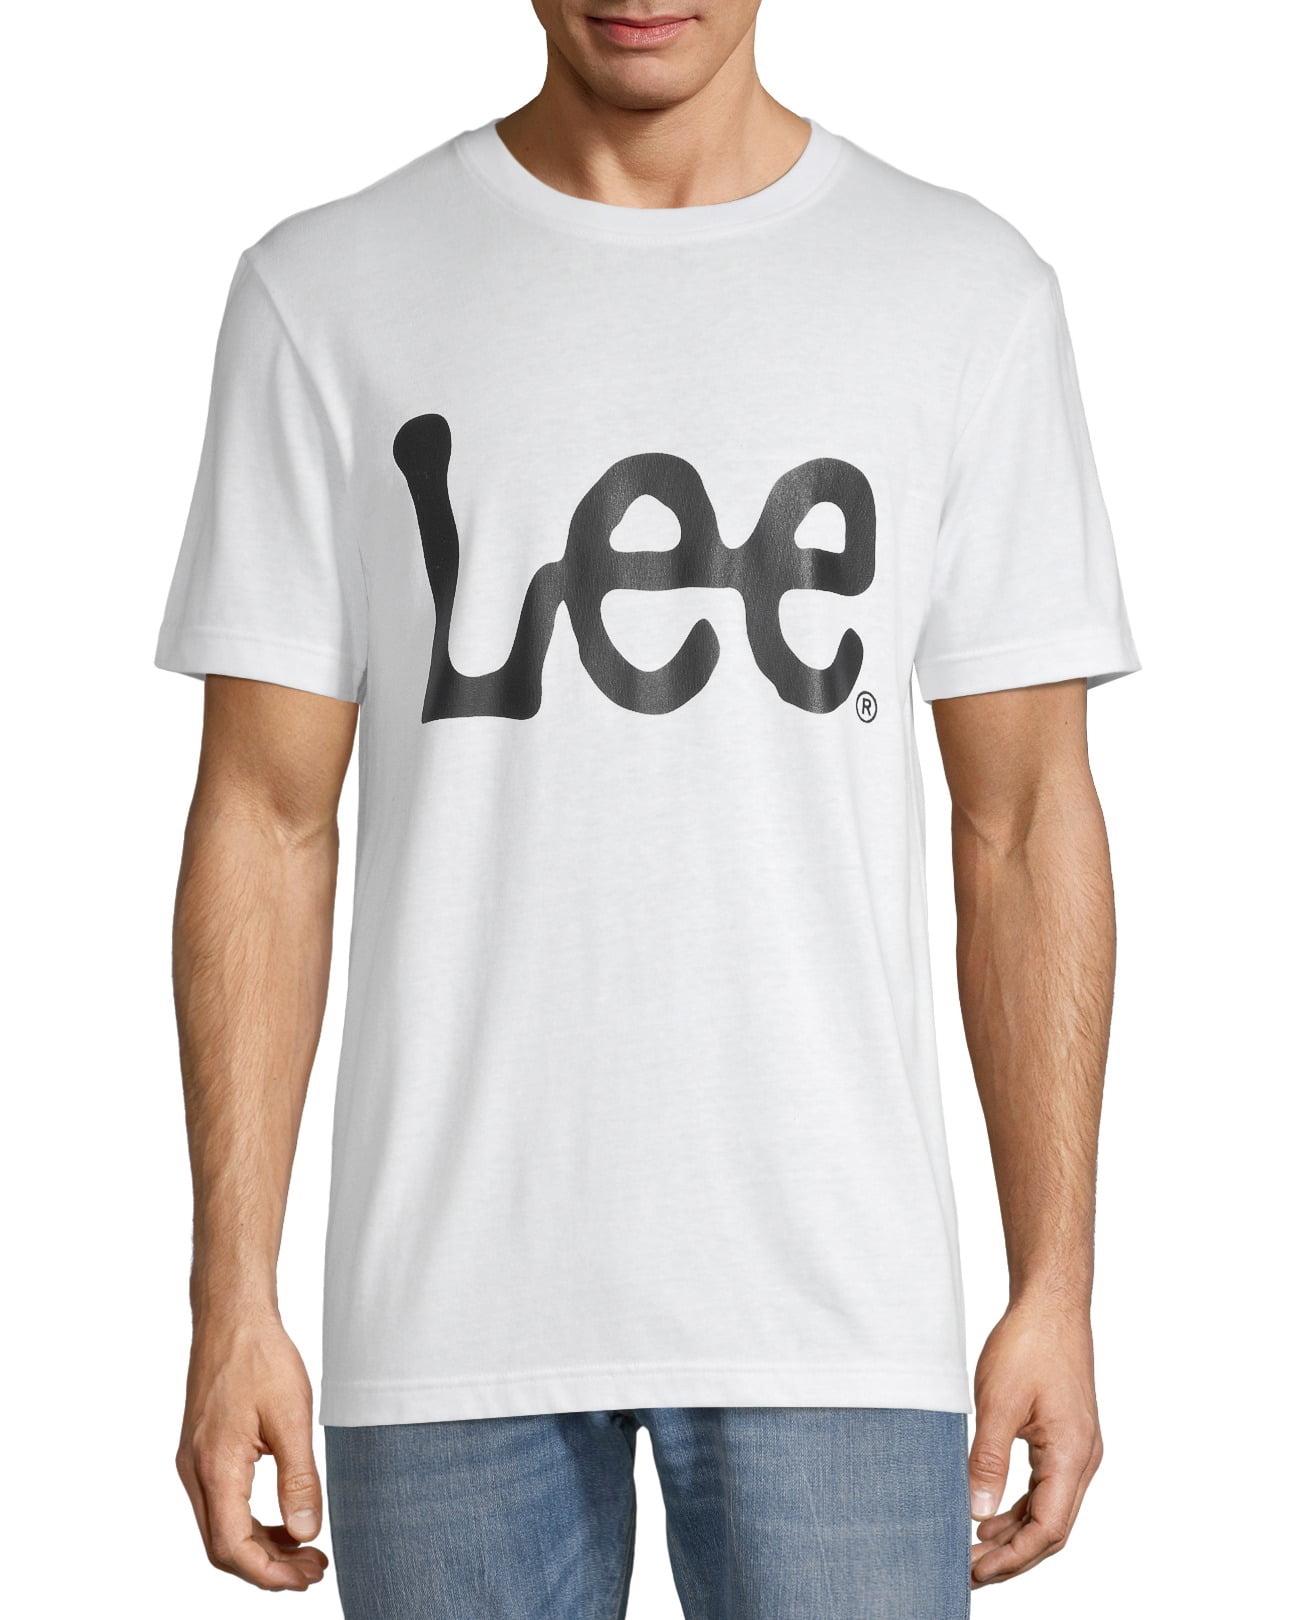 Lee - Lee Men's Crew Neck Logo Graphic T-shirt - Walmart.com - Walmart.com